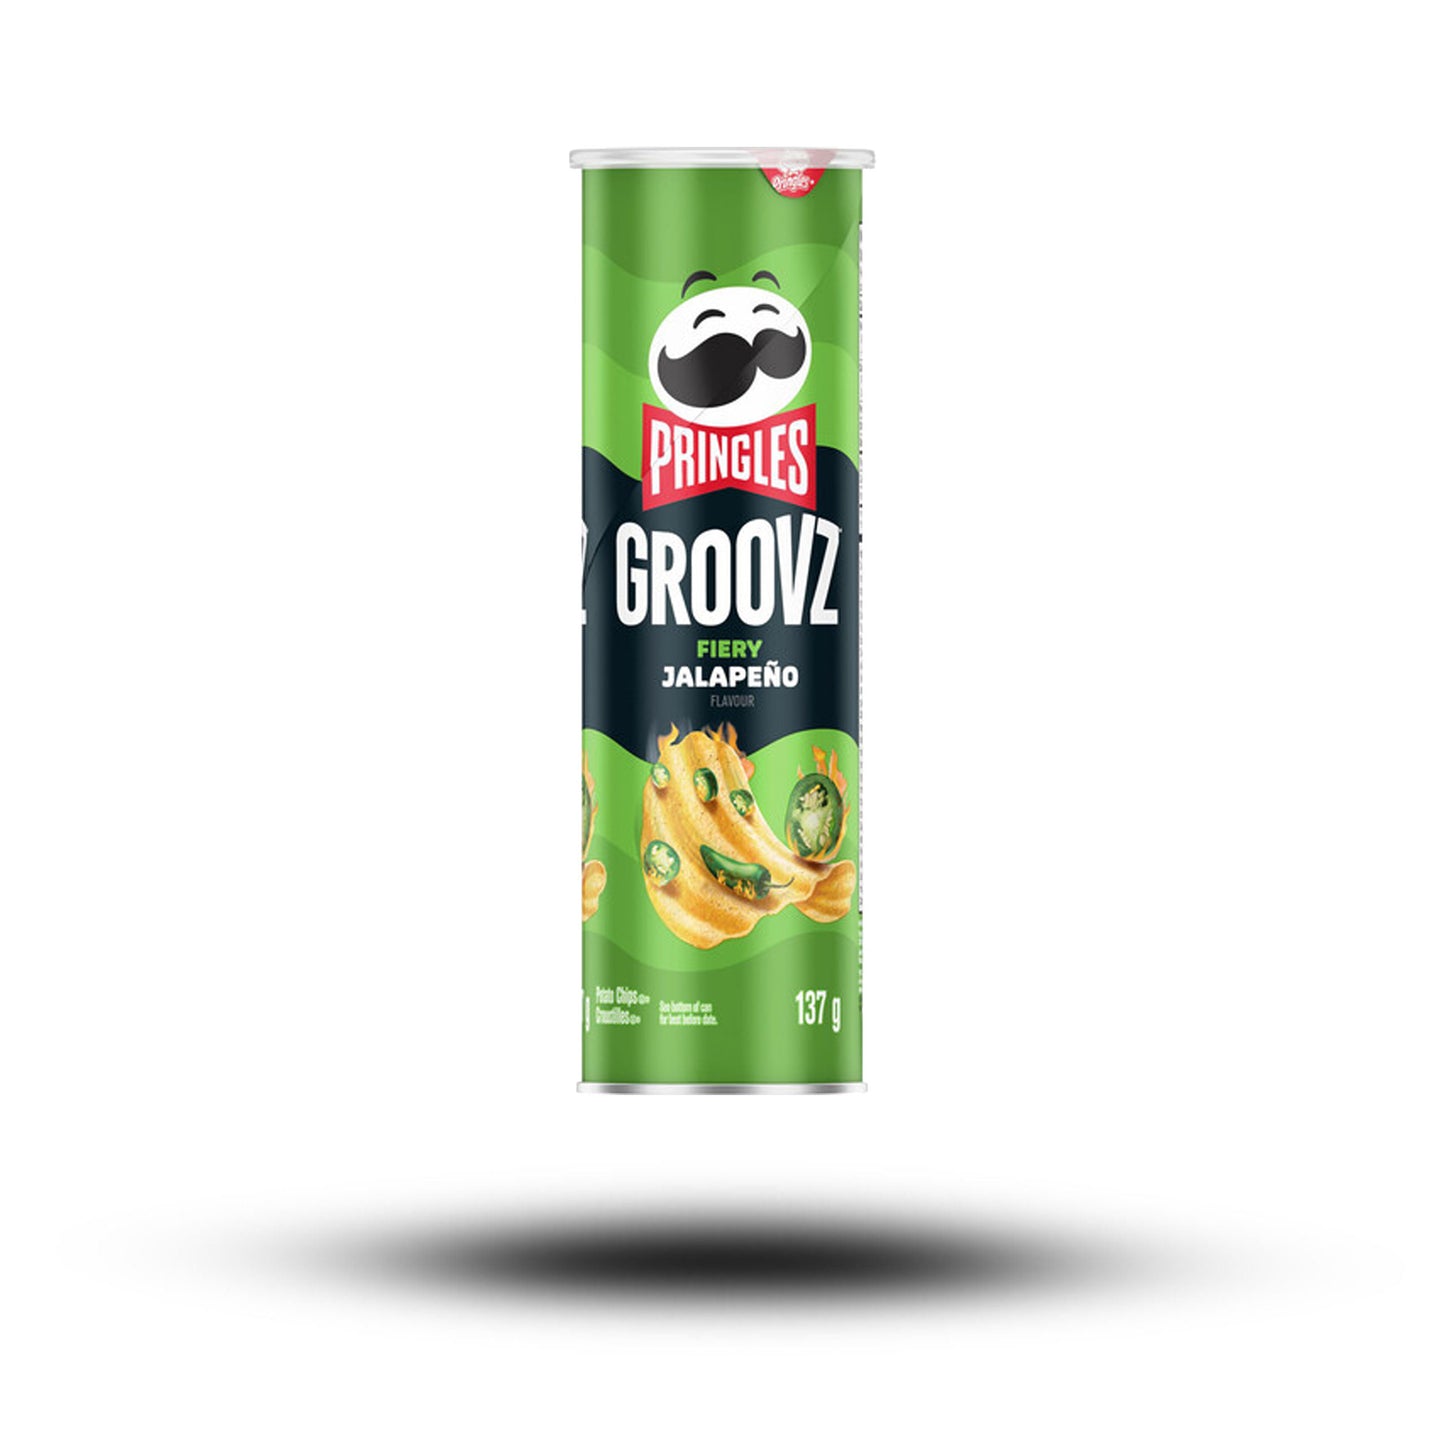 Pringles Groovz Fiery Jalapeno 137g